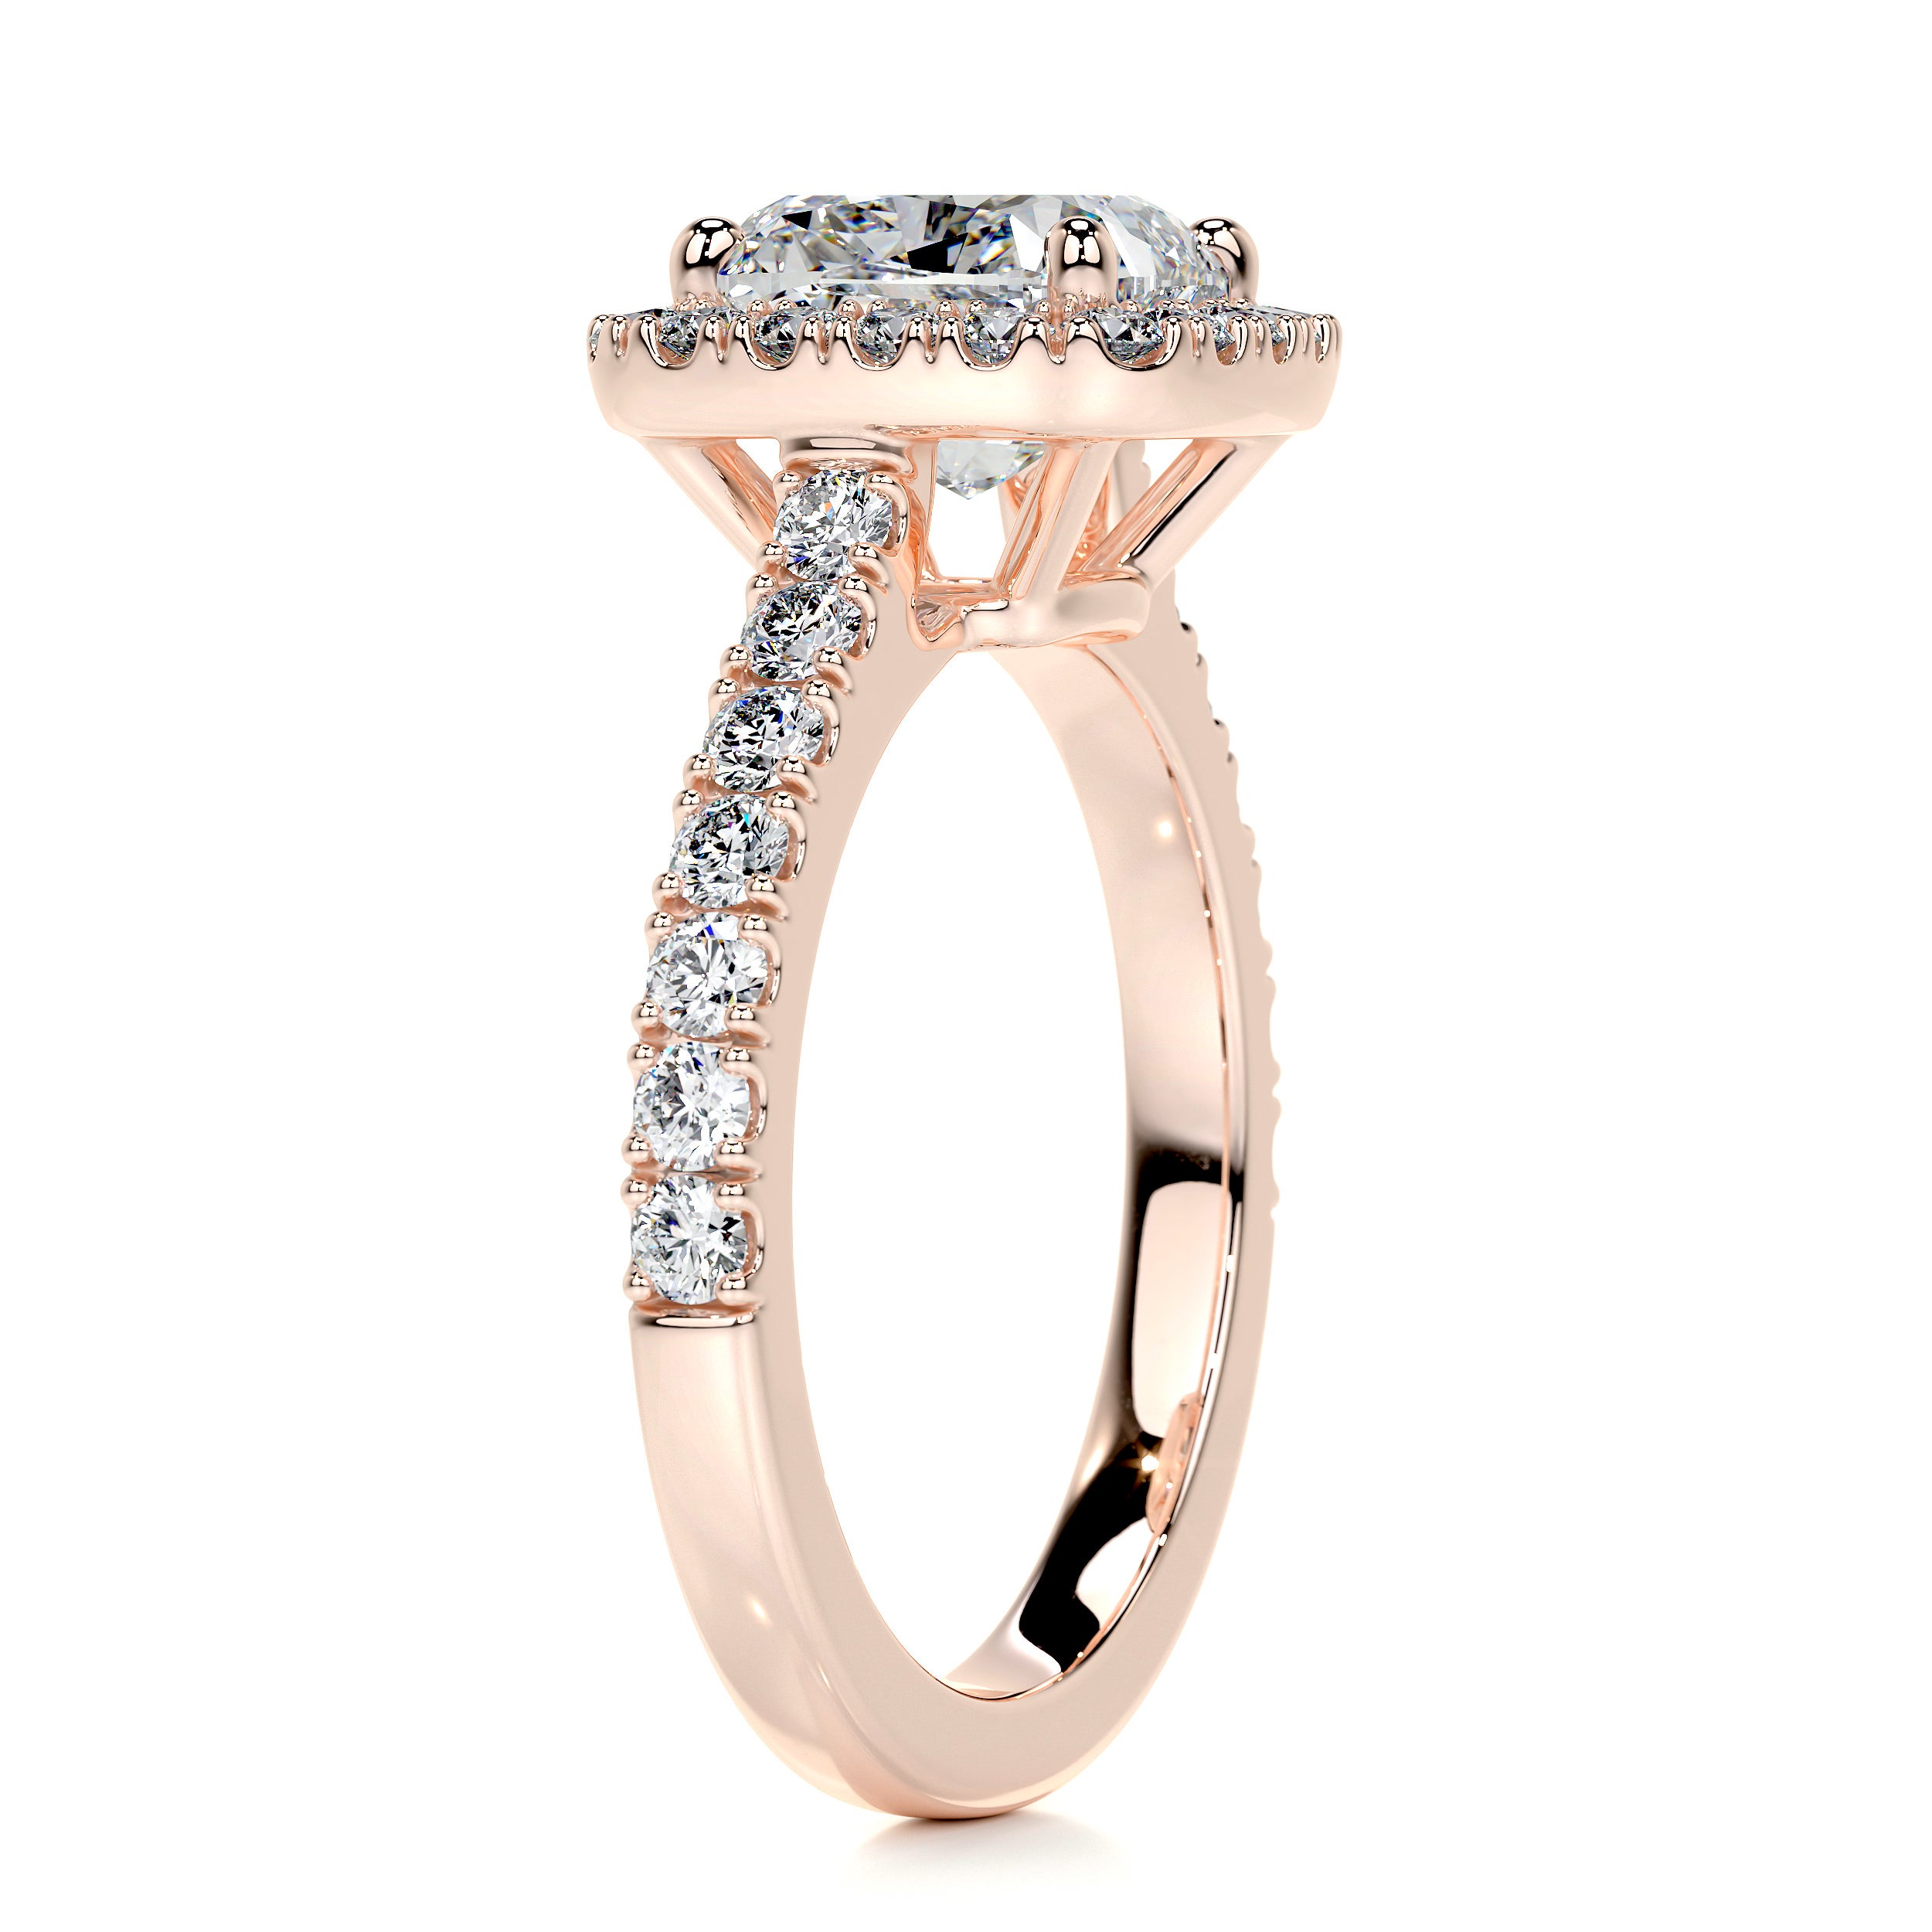 Celeste Diamond Engagement Ring   (2 Carat) -14K Rose Gold